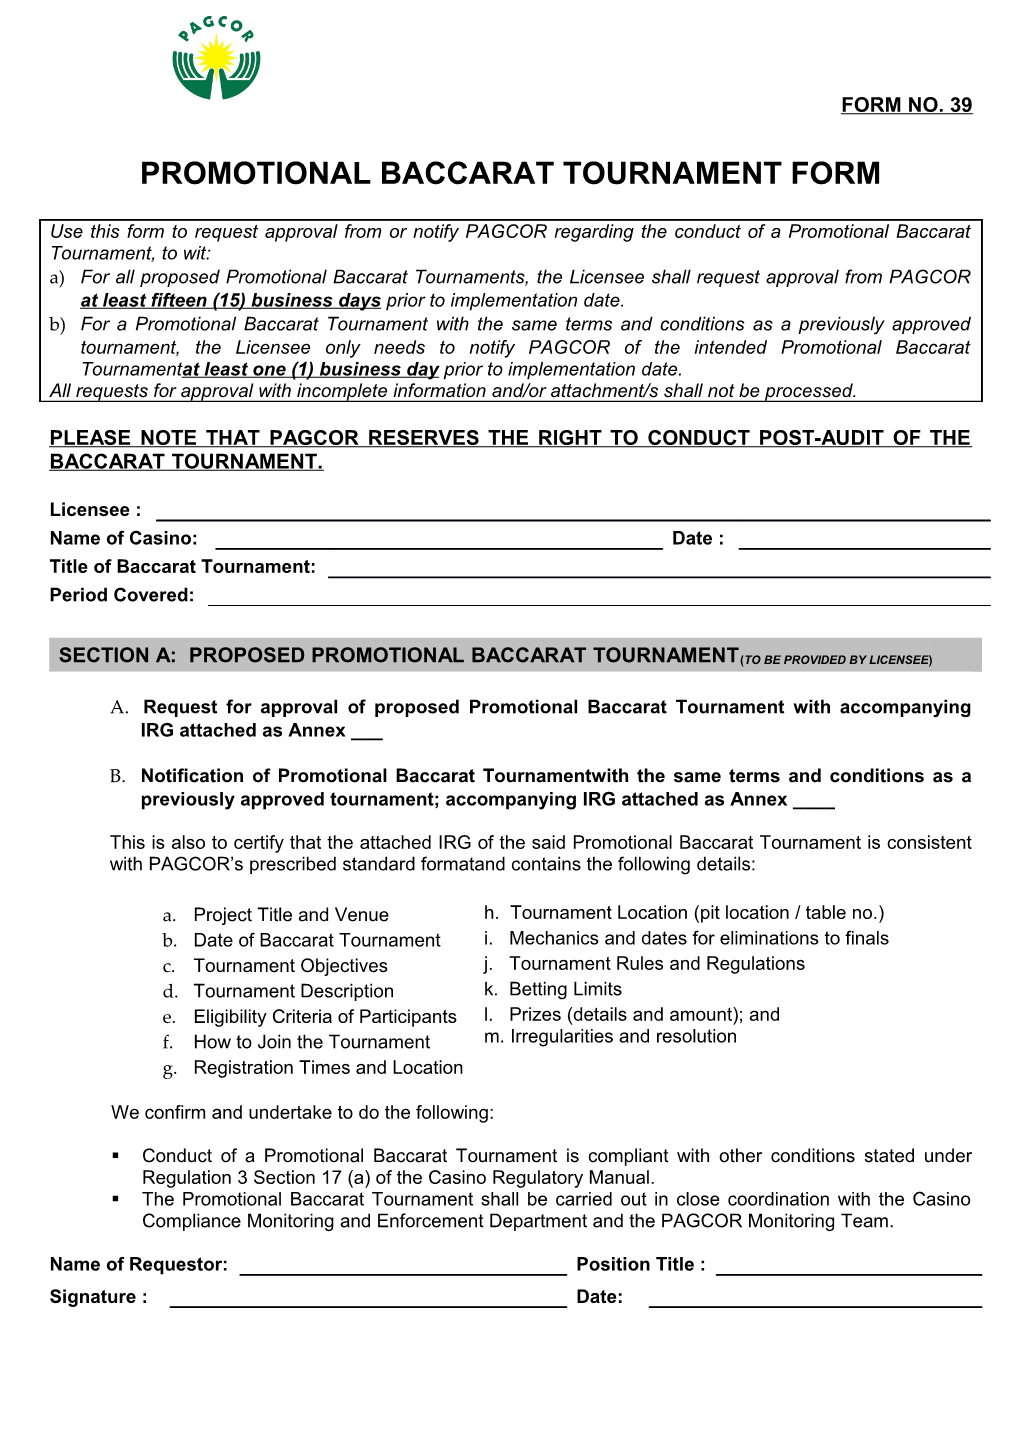 Promotional Baccarat Tournament Form